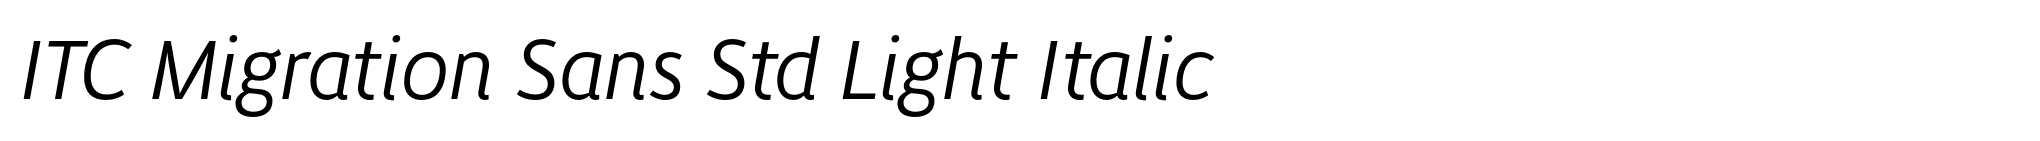 ITC Migration Sans Std Light Italic image